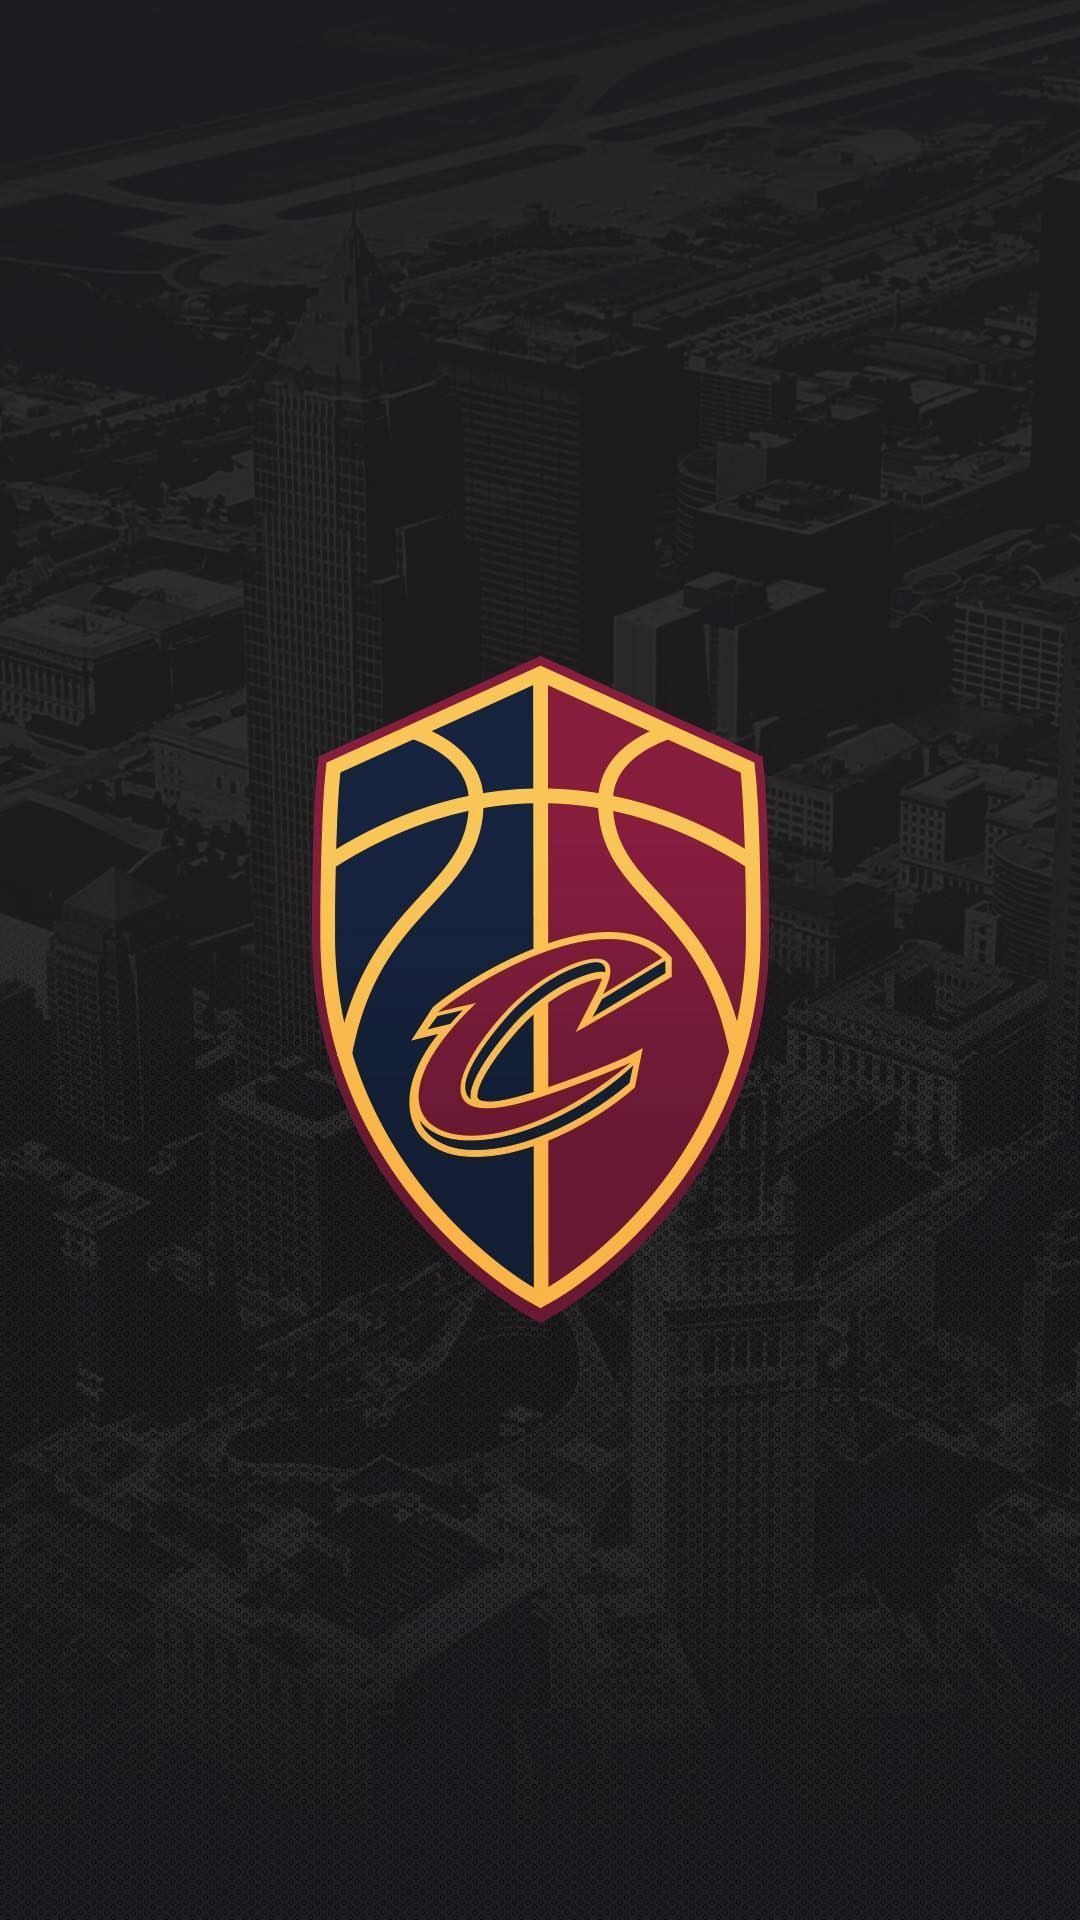 Wallpaper wallpaper sport logo basketball NBA Cleveland Cavaliers  glitter checkered images for desktop section спорт  download